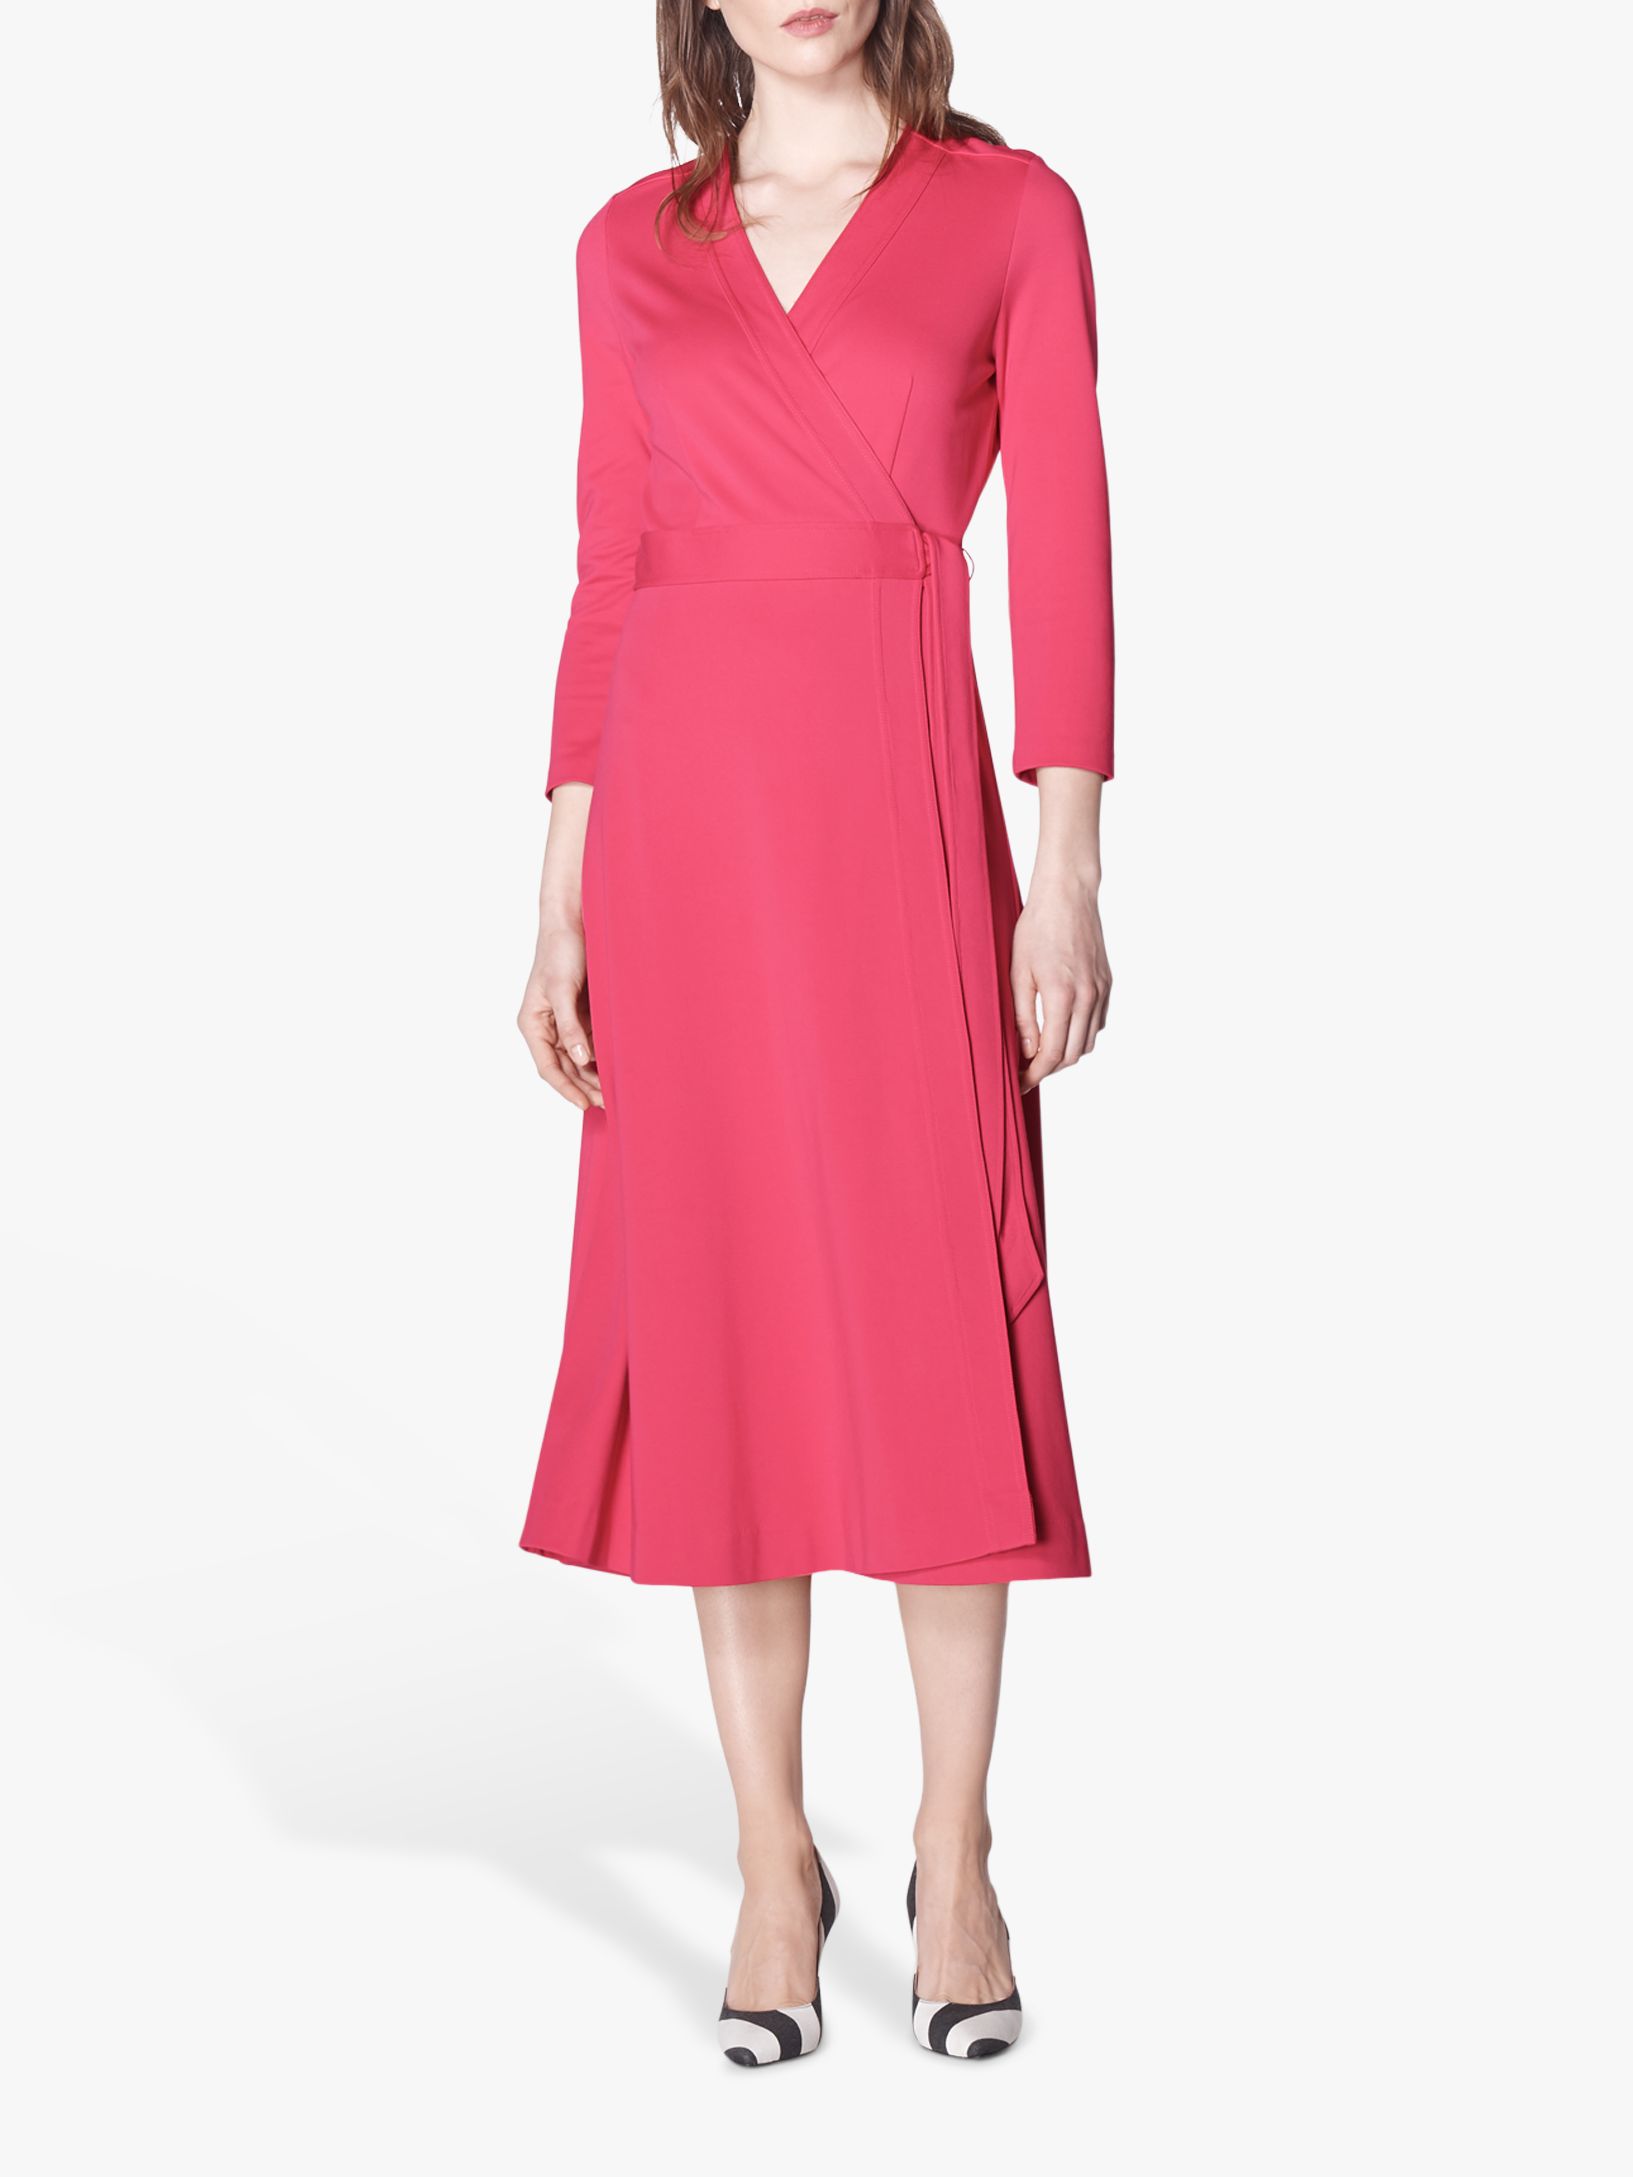 L.K.Bennett Juno Wrap Dress, Raspberry Pink